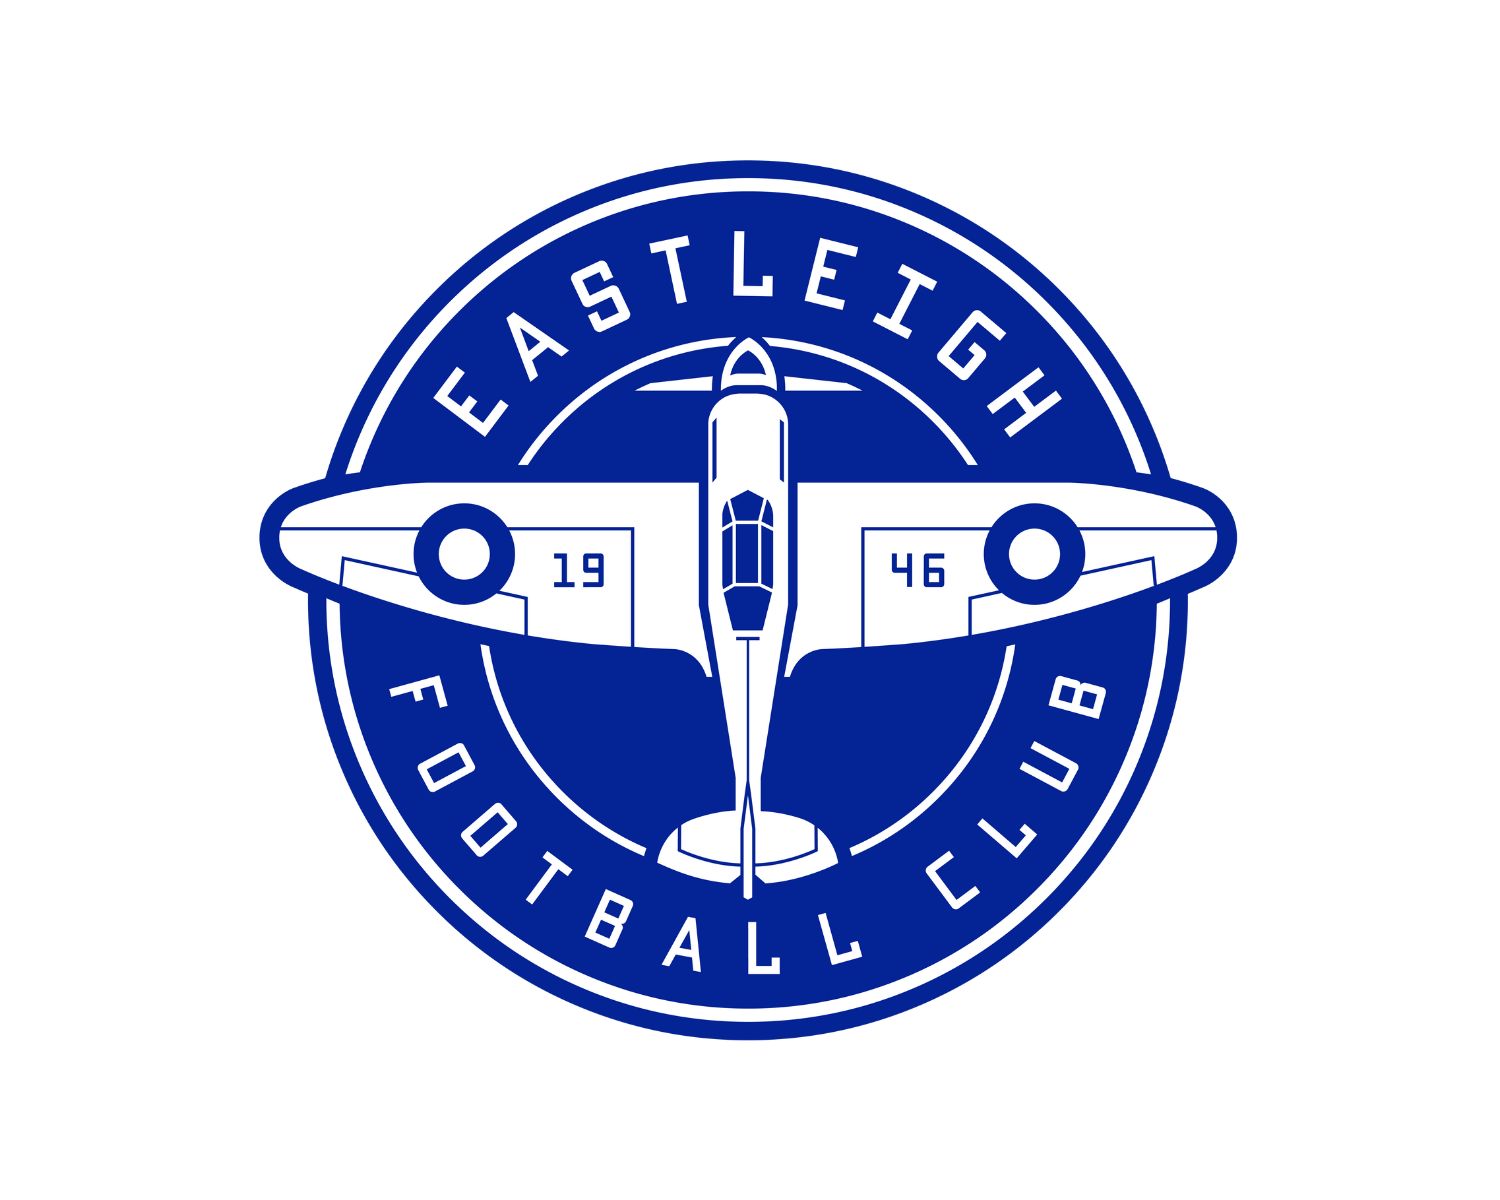 eastleigh-fc-23-football-club-facts